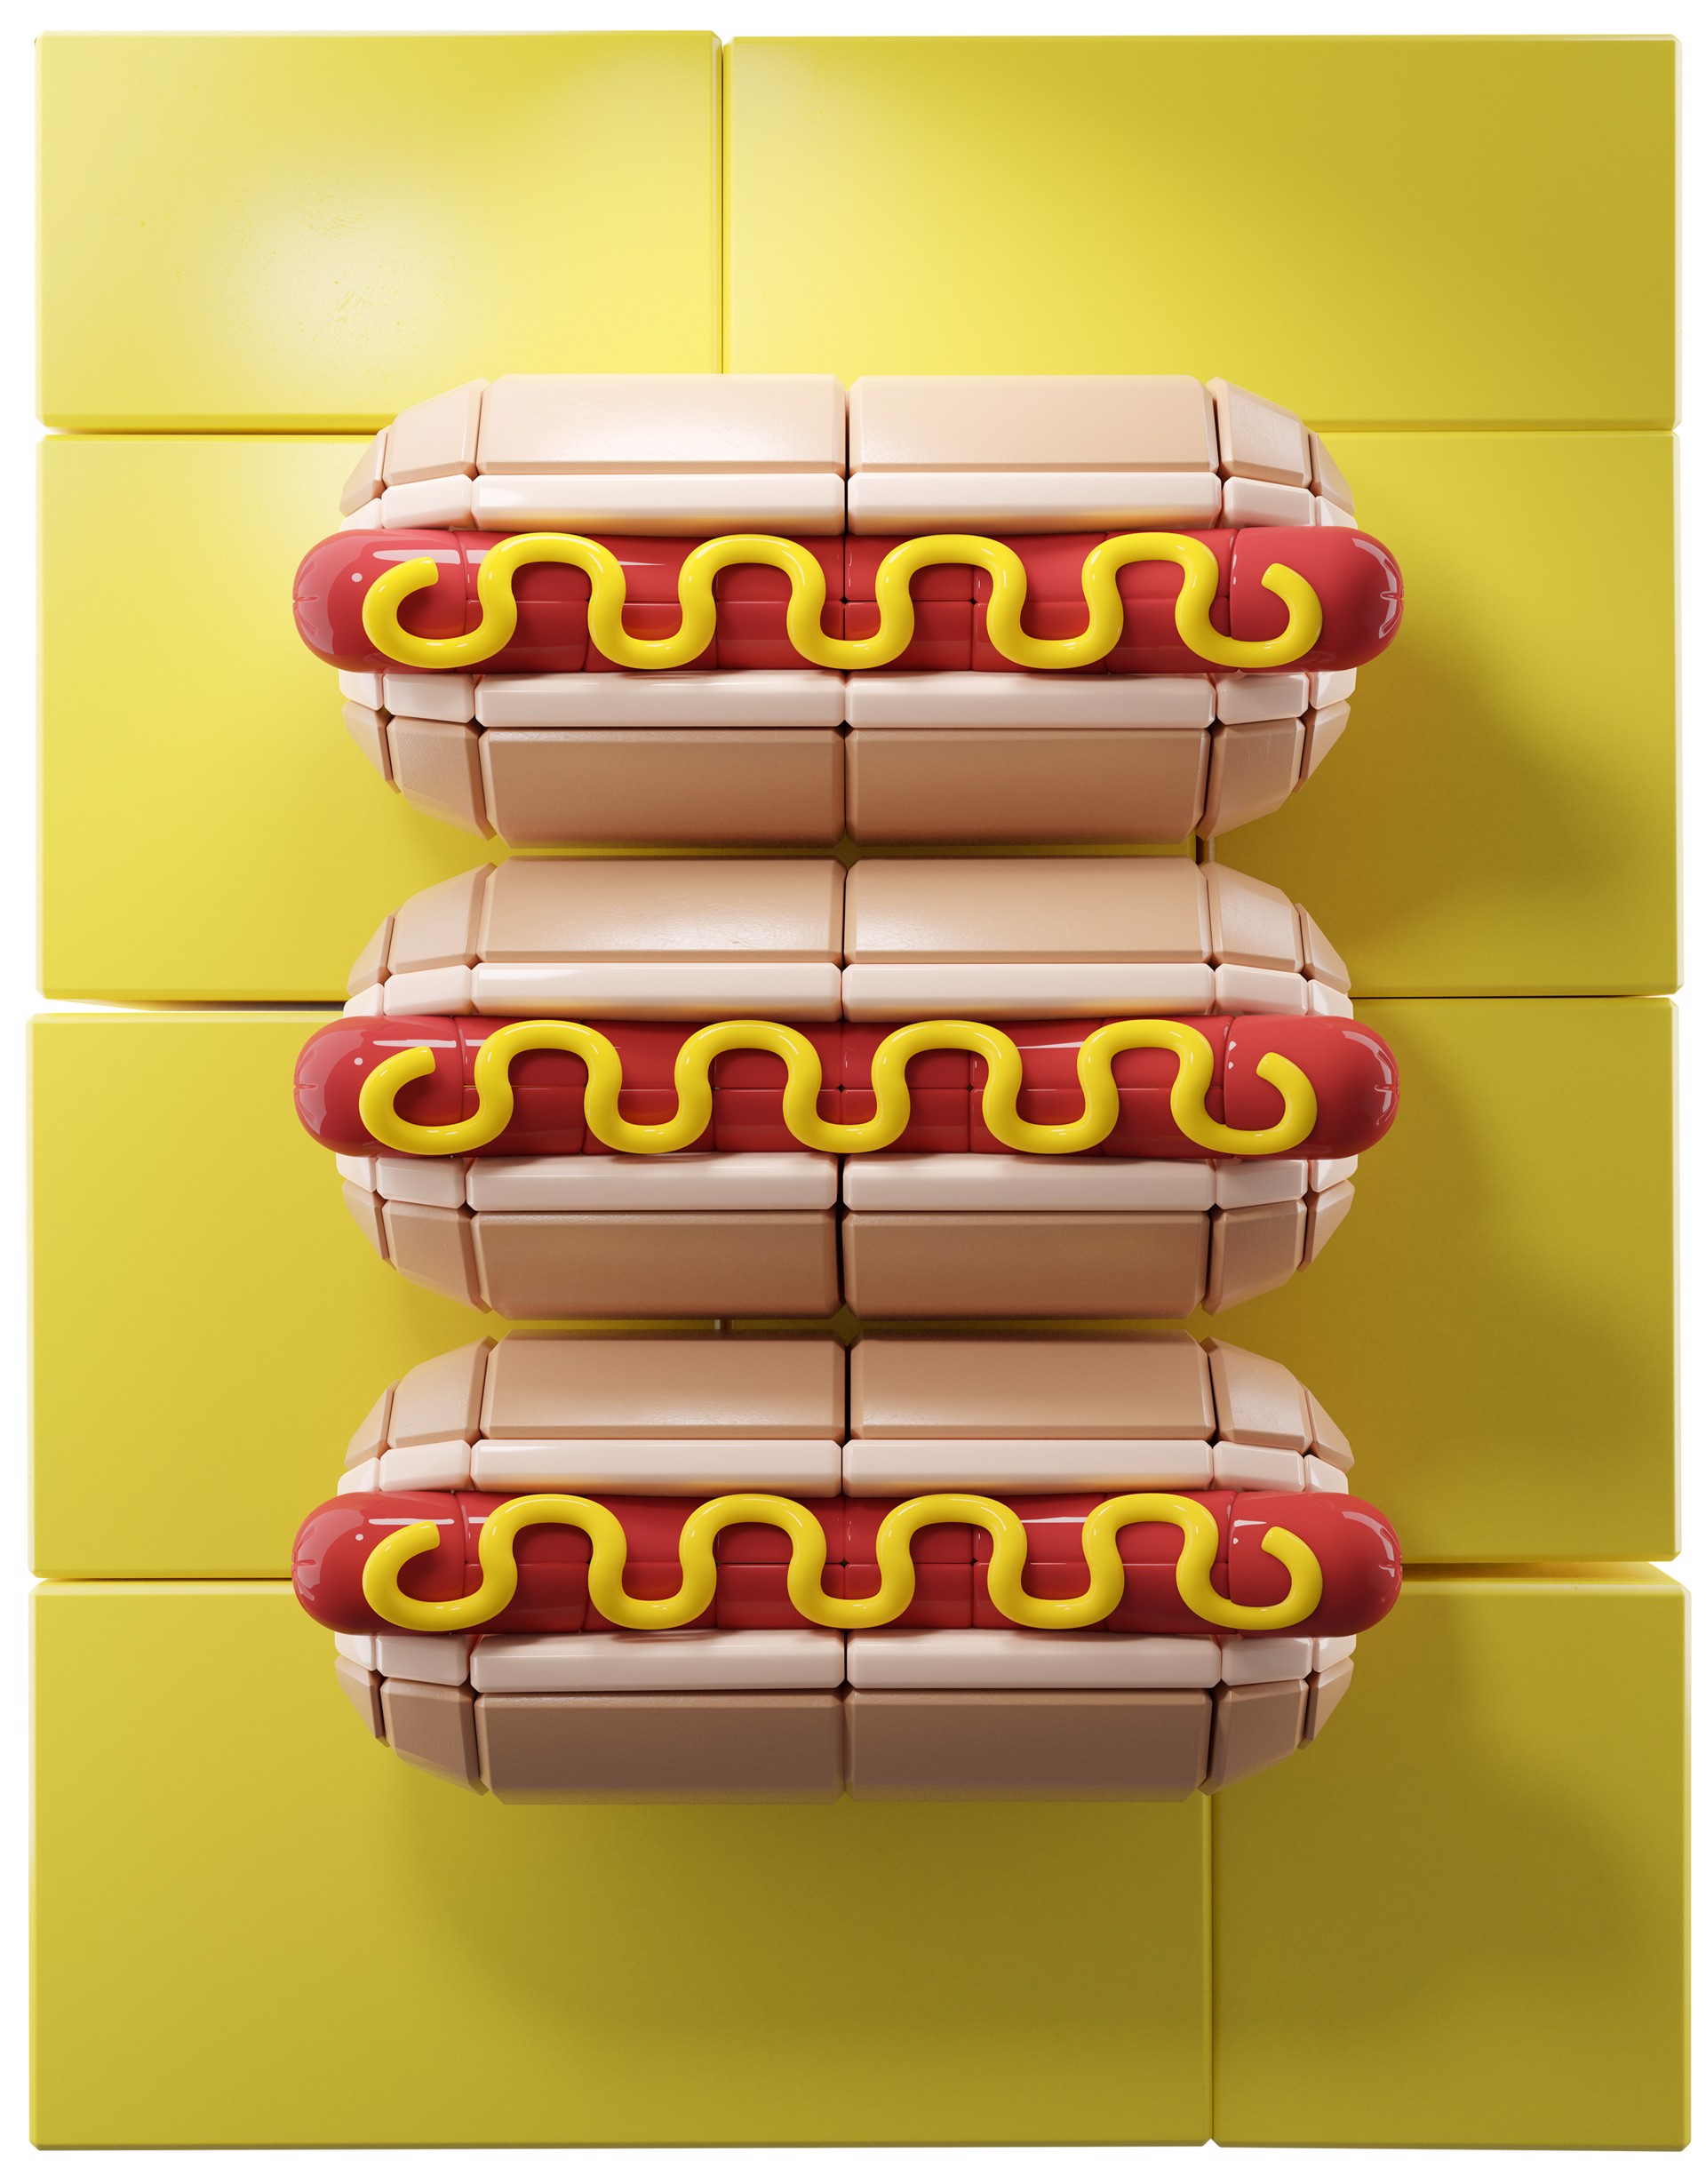 Hot Dog Trio II by Eli Warren